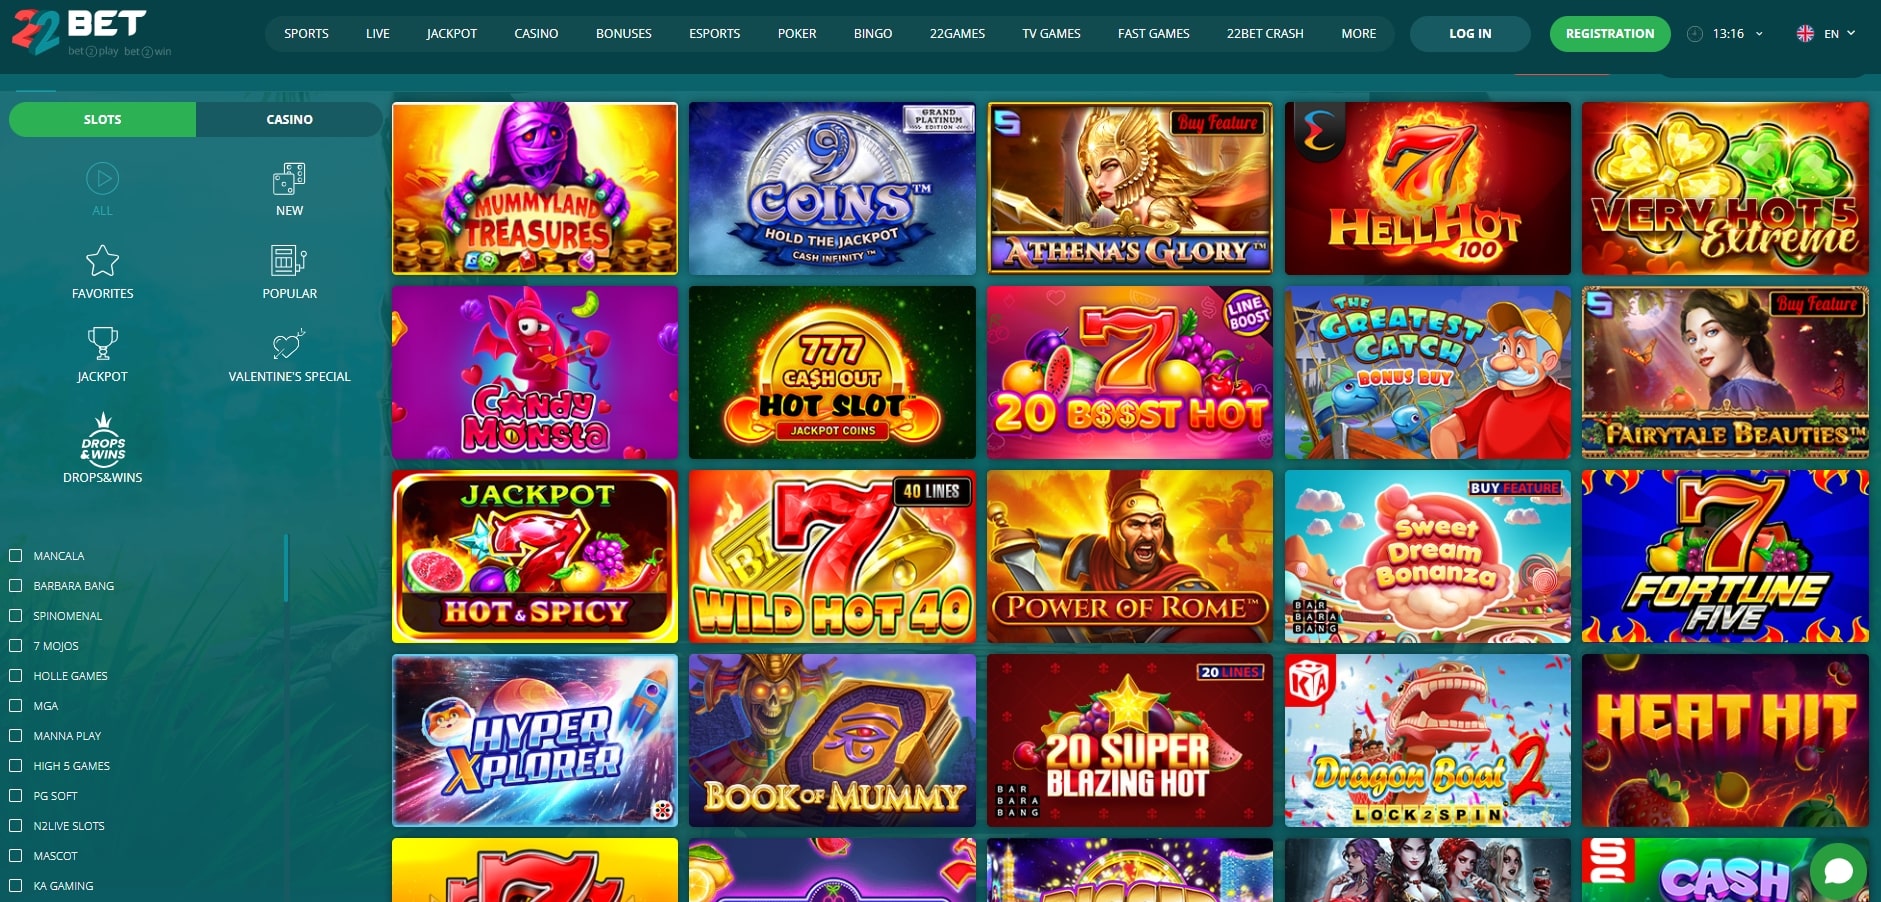 22bet Casino Games